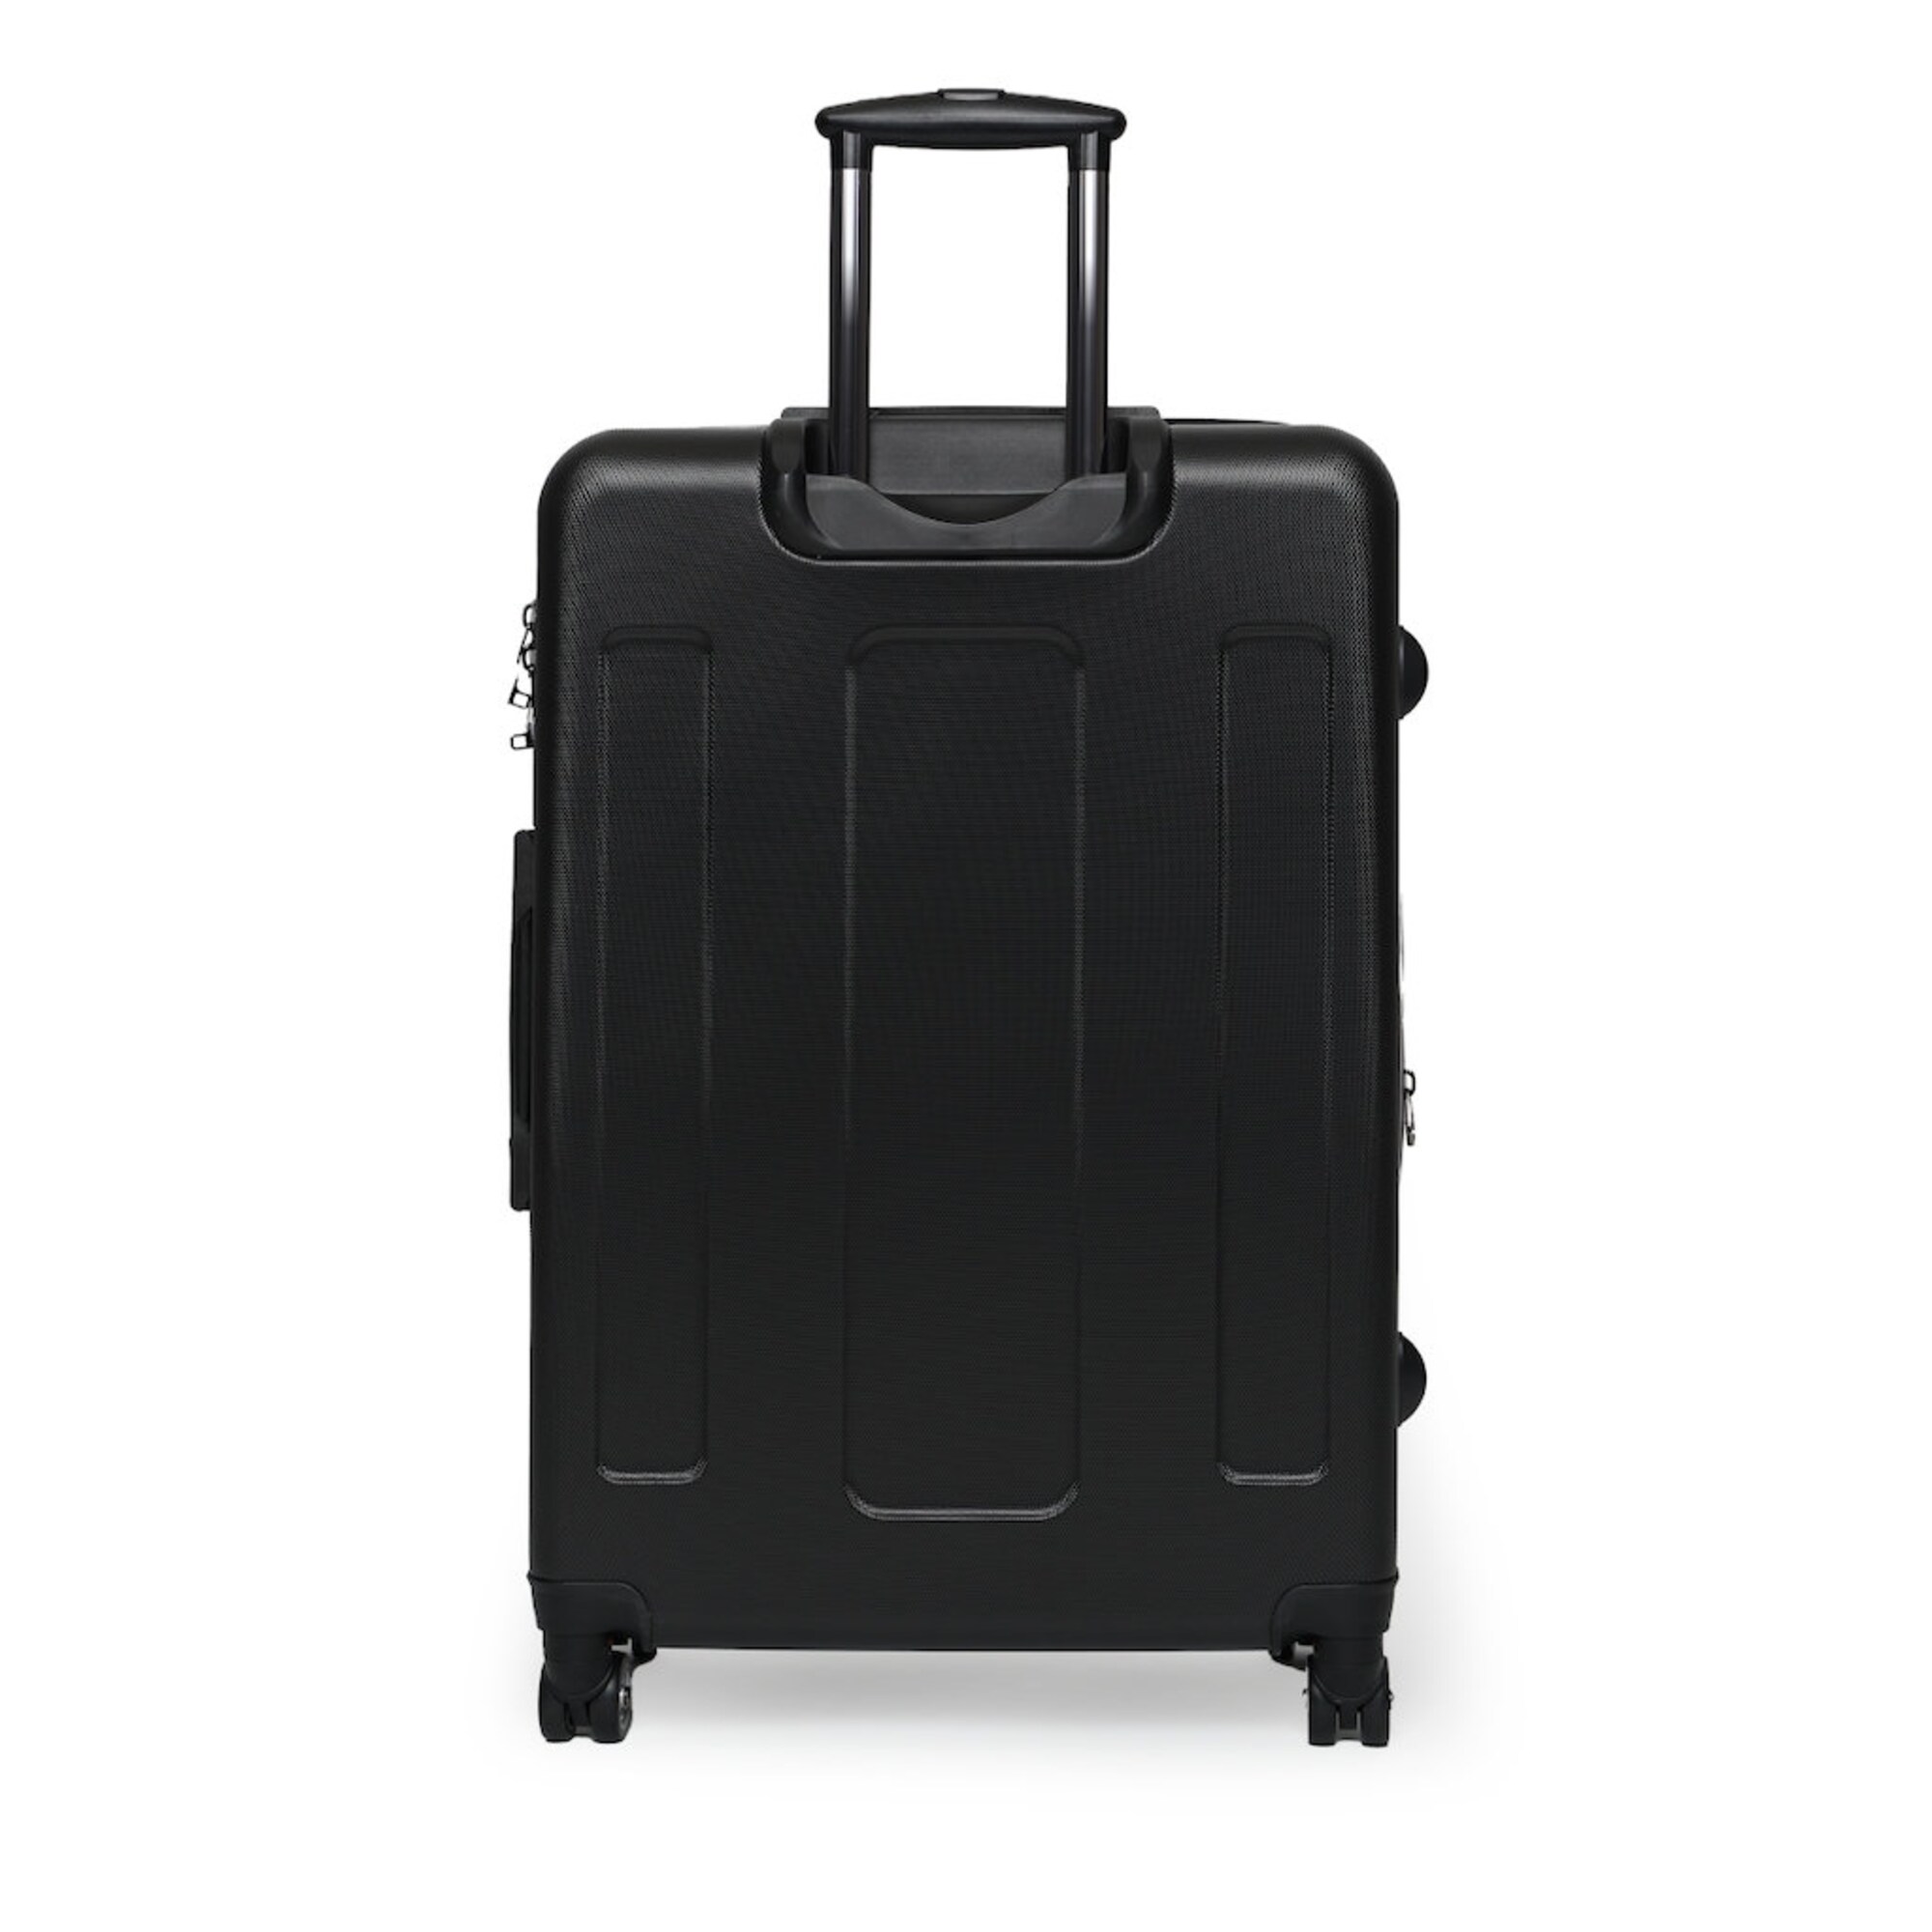 The Payton Suitcase